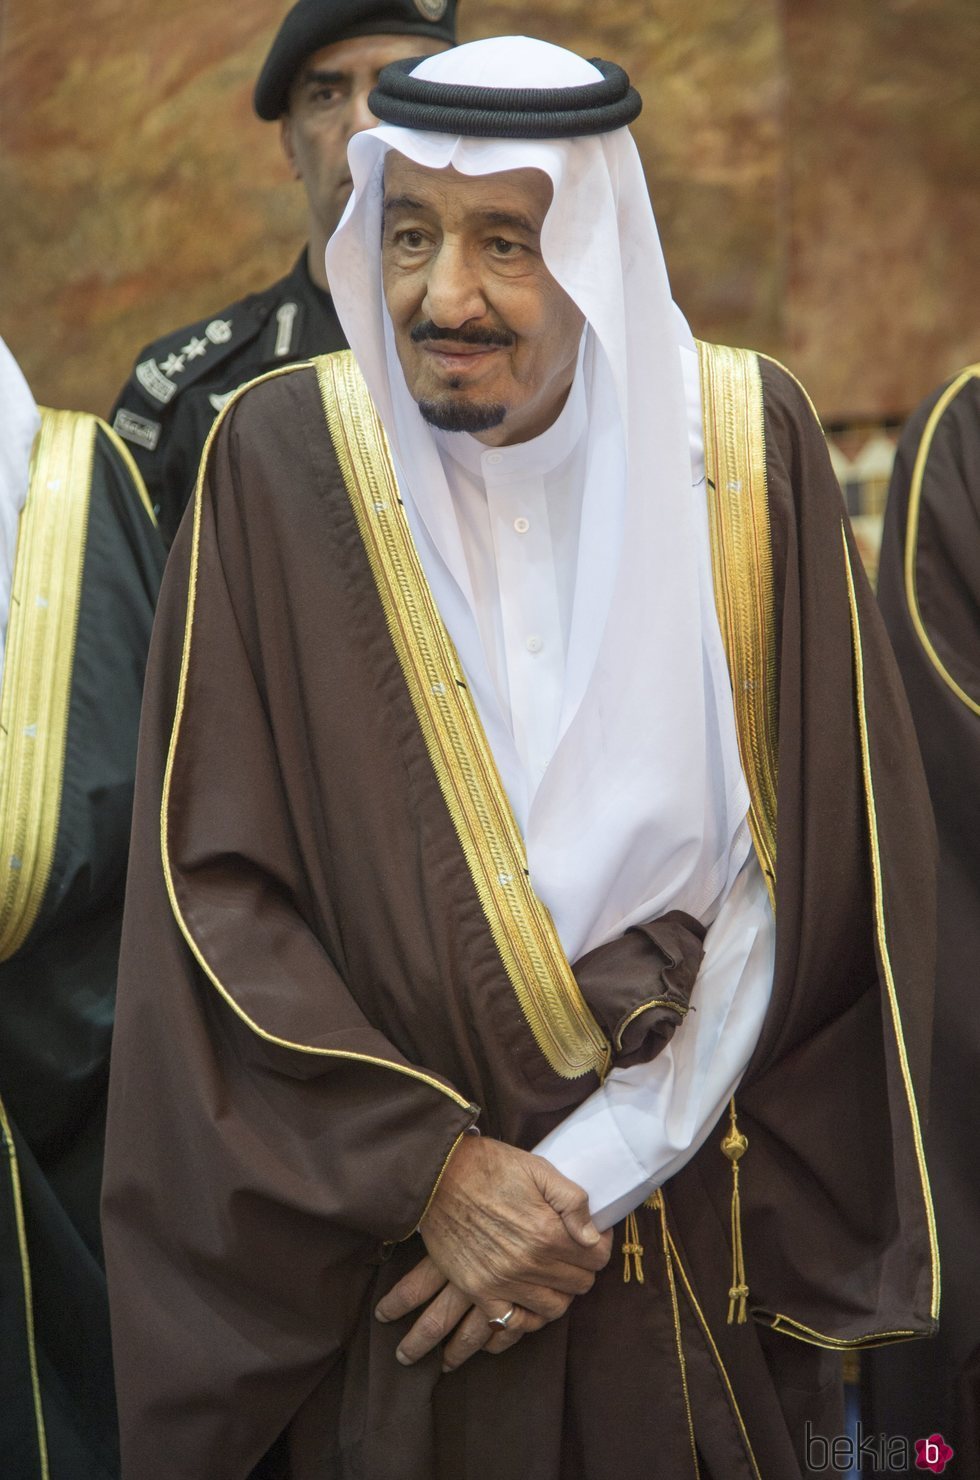 El Rey de Arabia Saudí, Salman bin Abdulaziz Al Saud